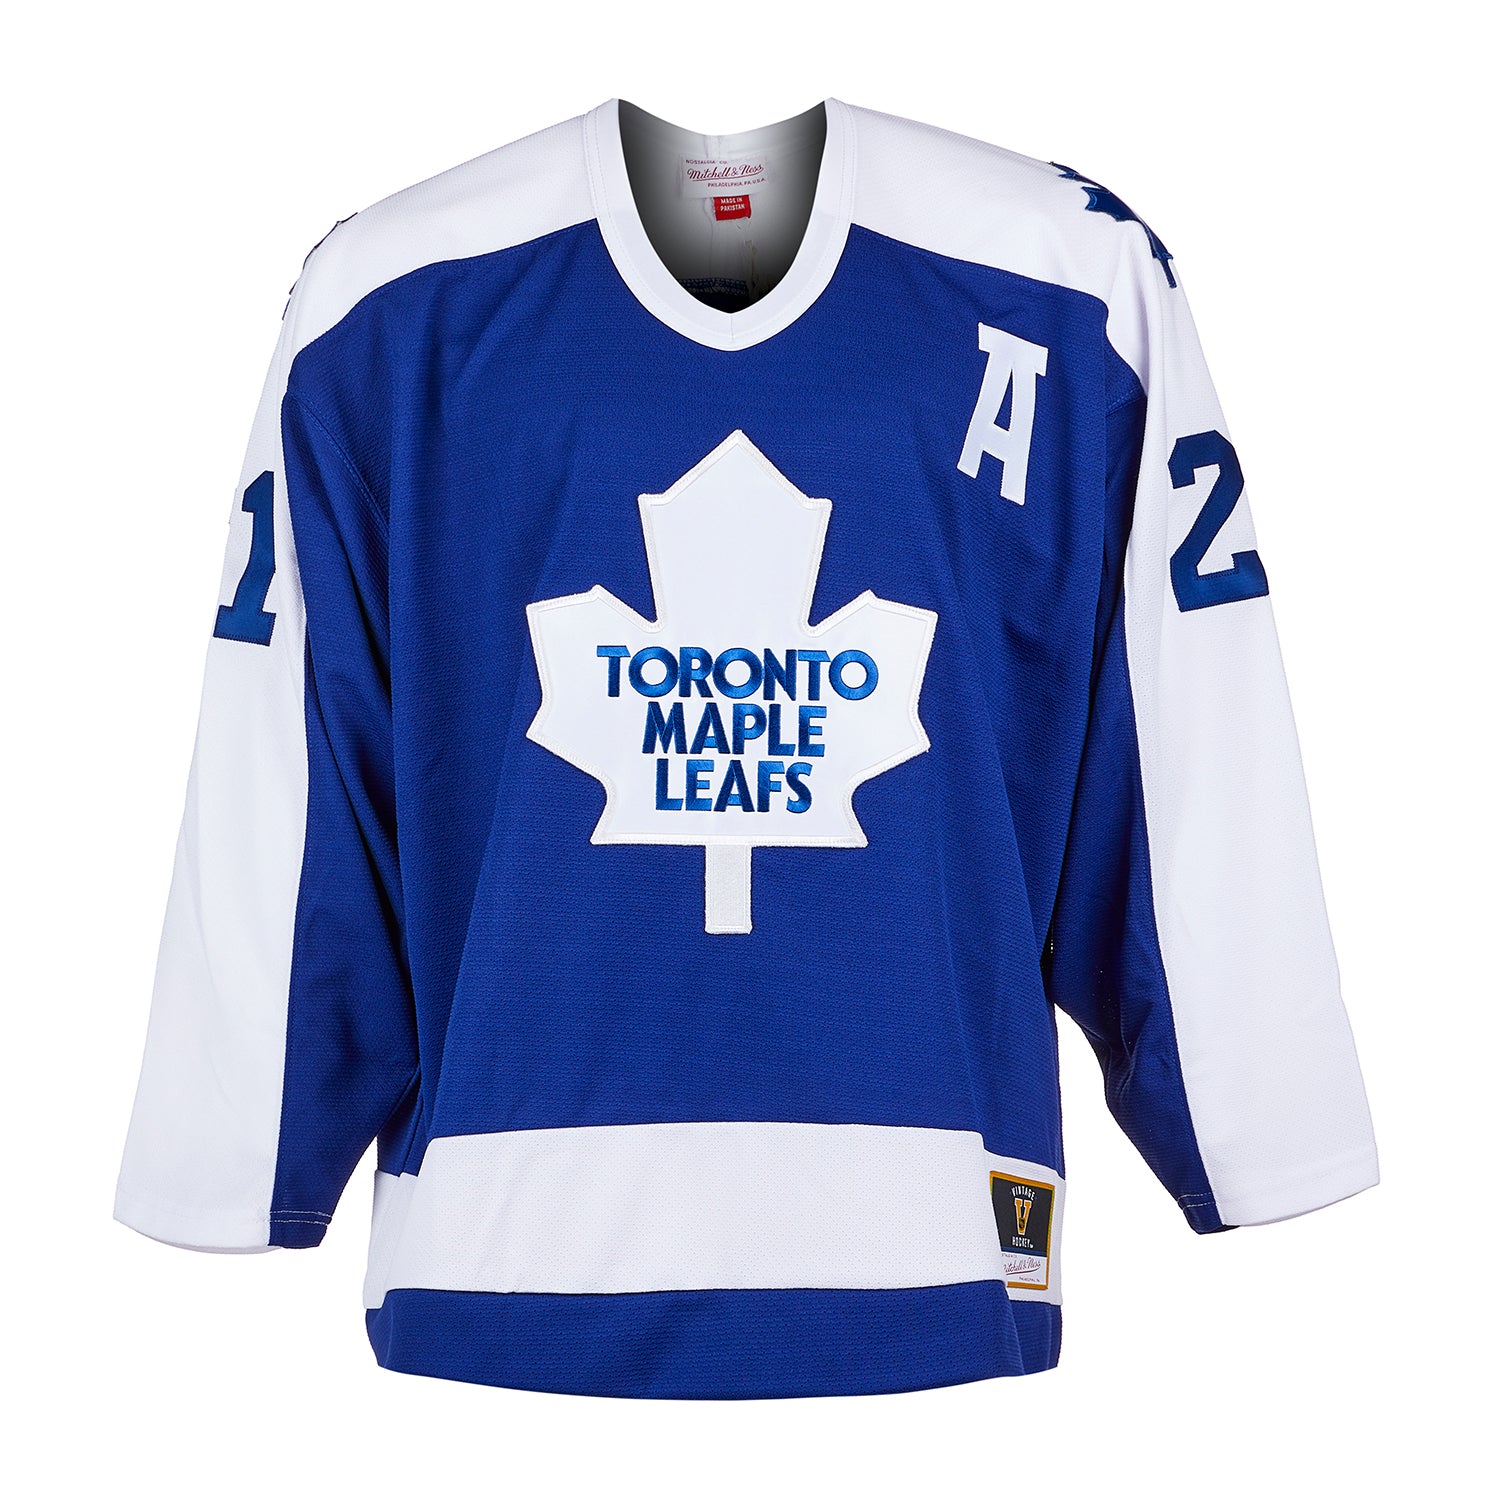 Borje Salming Toronto Maple Leafs Signed Retro Fanatics Jersey - NHL  Auctions